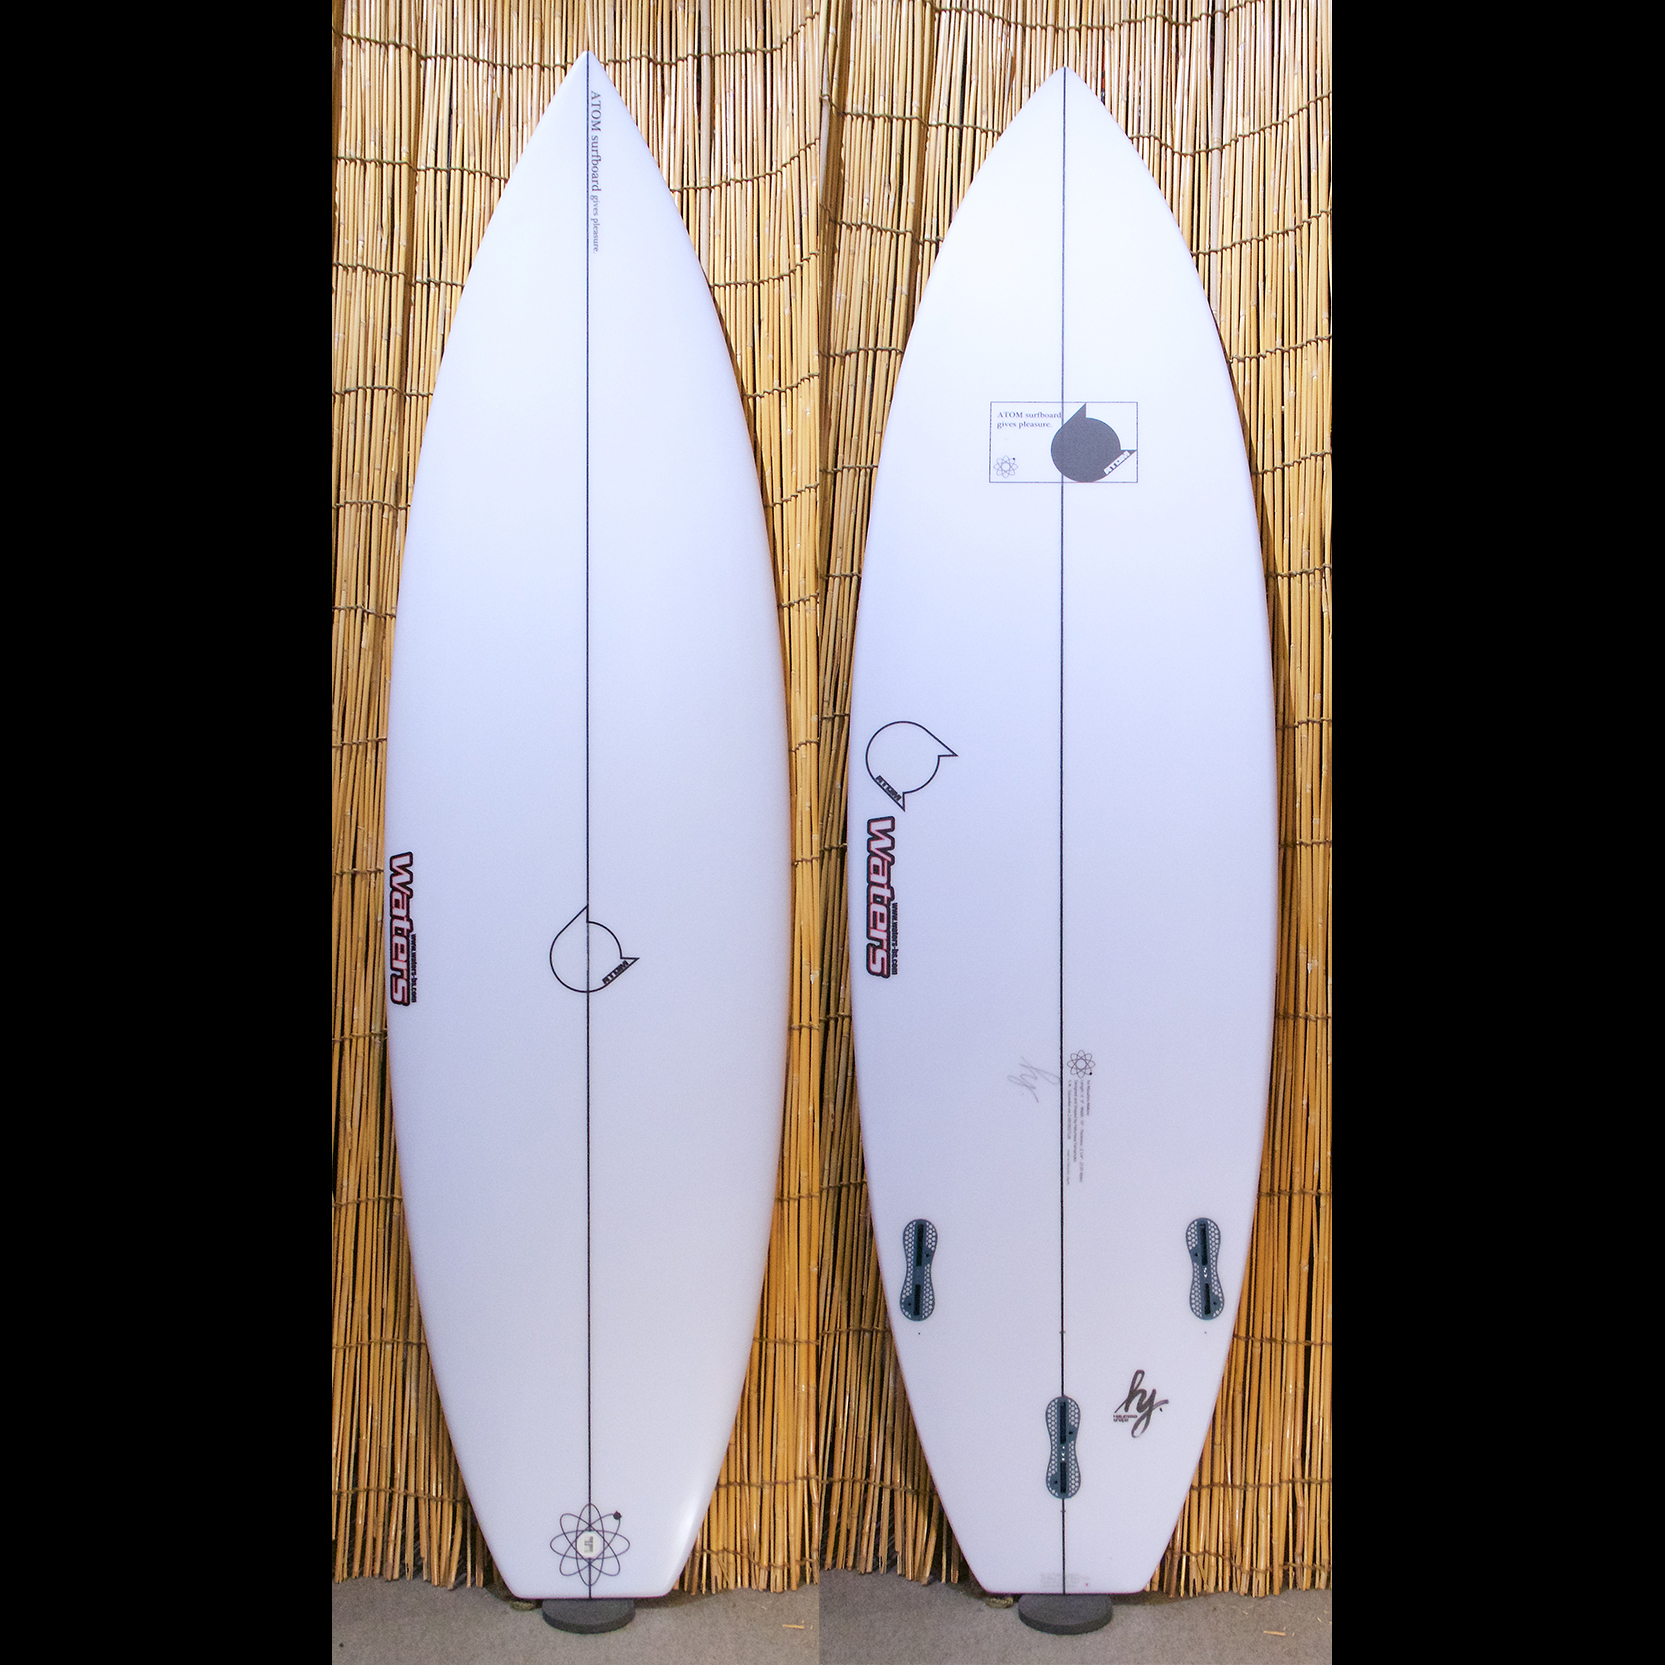 ATOM Surfboard “Squawker2.0” model